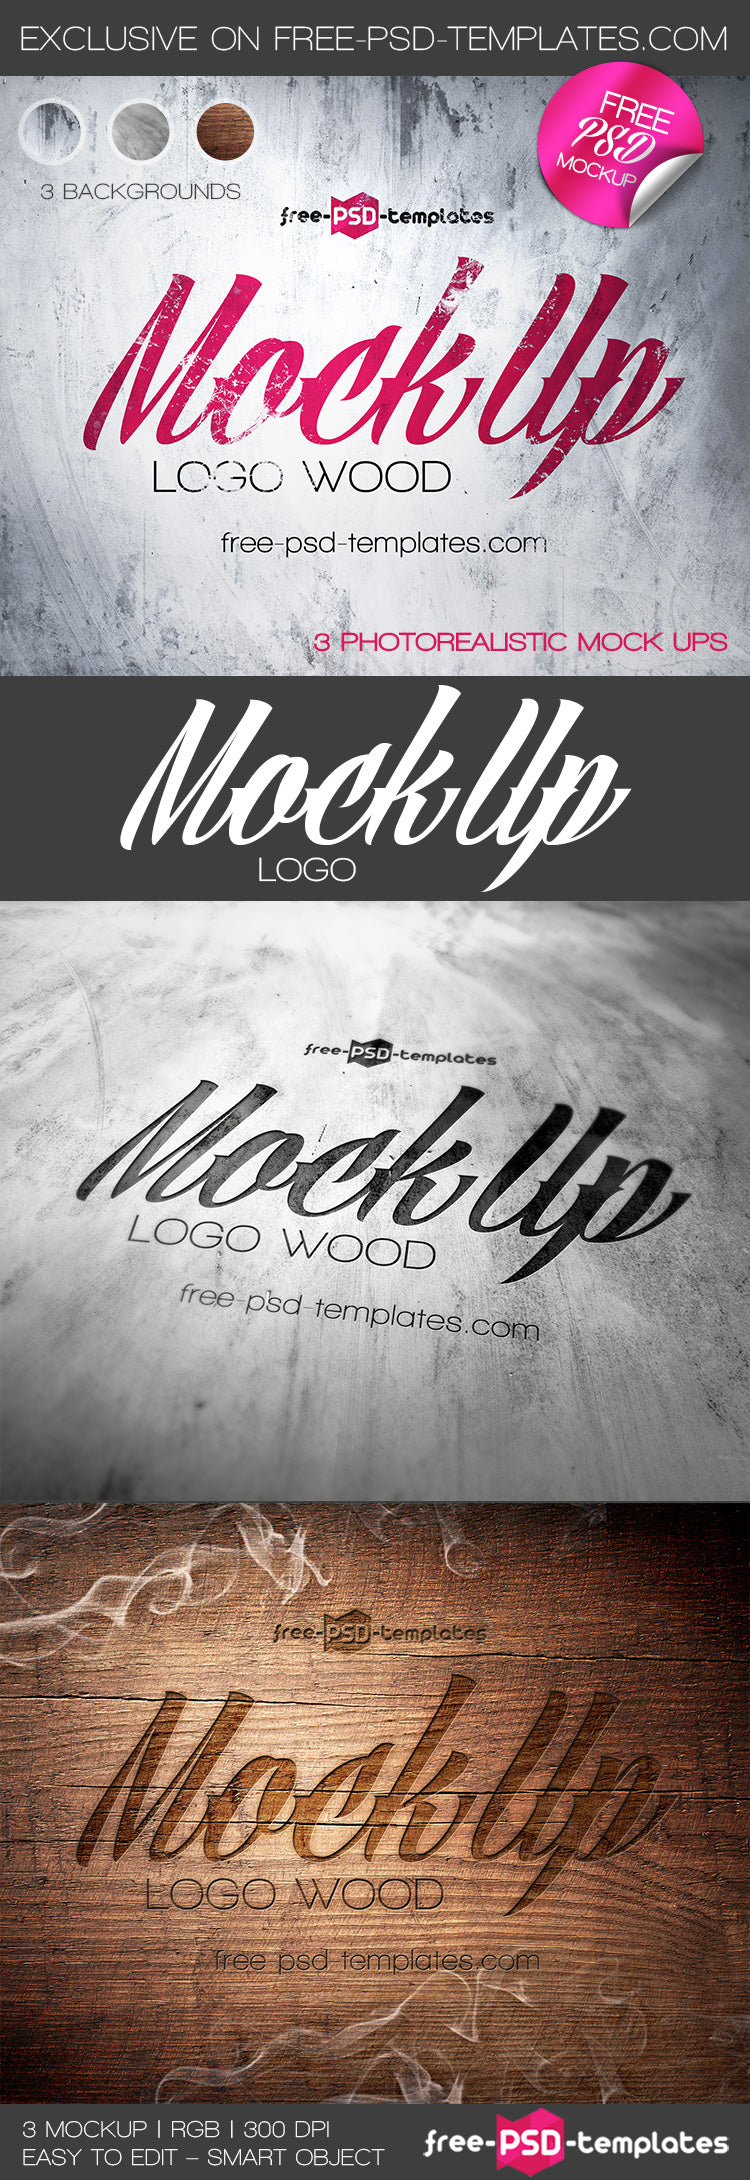 Free 3 Logo Mock-Up In Psd